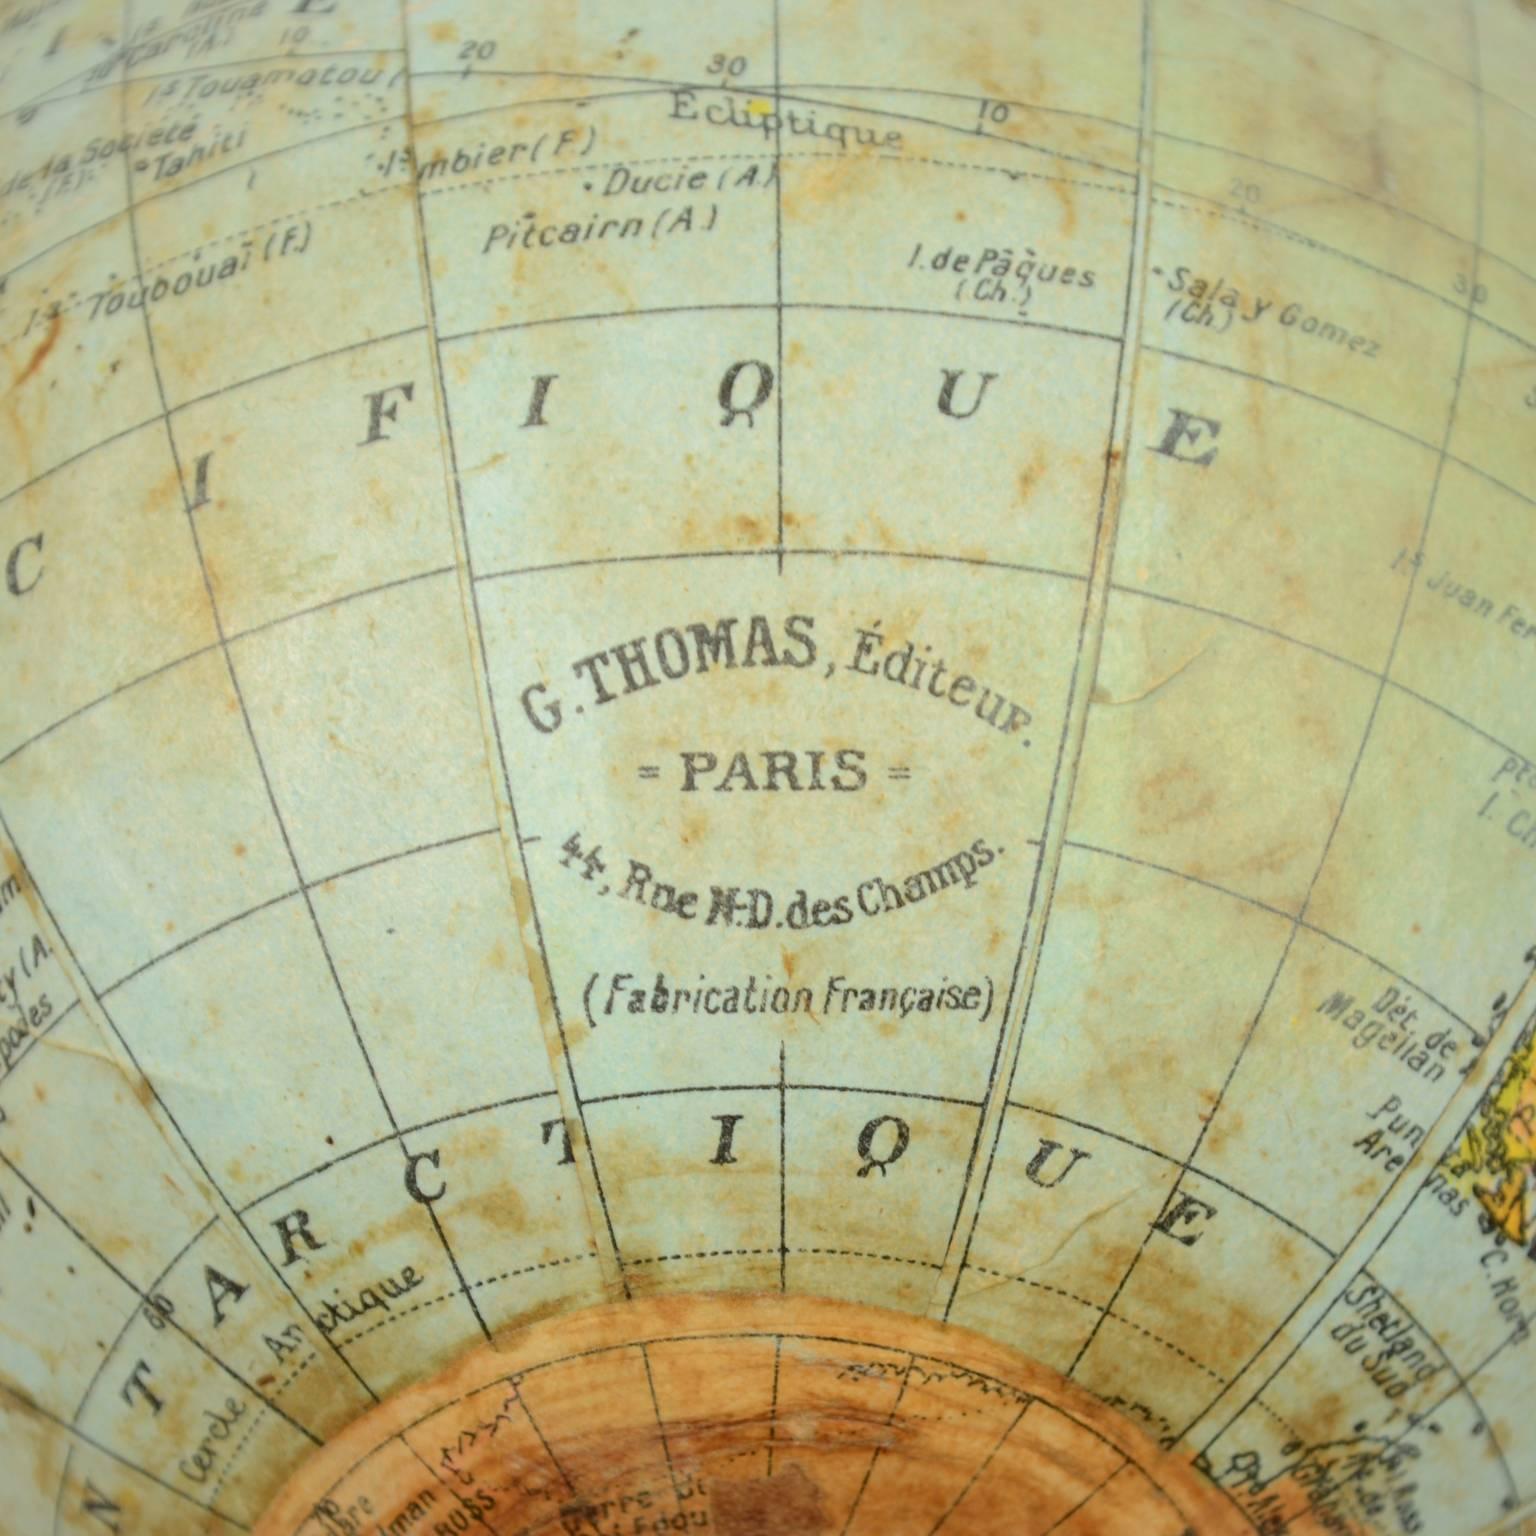 Mid-20th Century Terrestrial Globe Edited by G. Thomas Éditeur Paris in 1930s